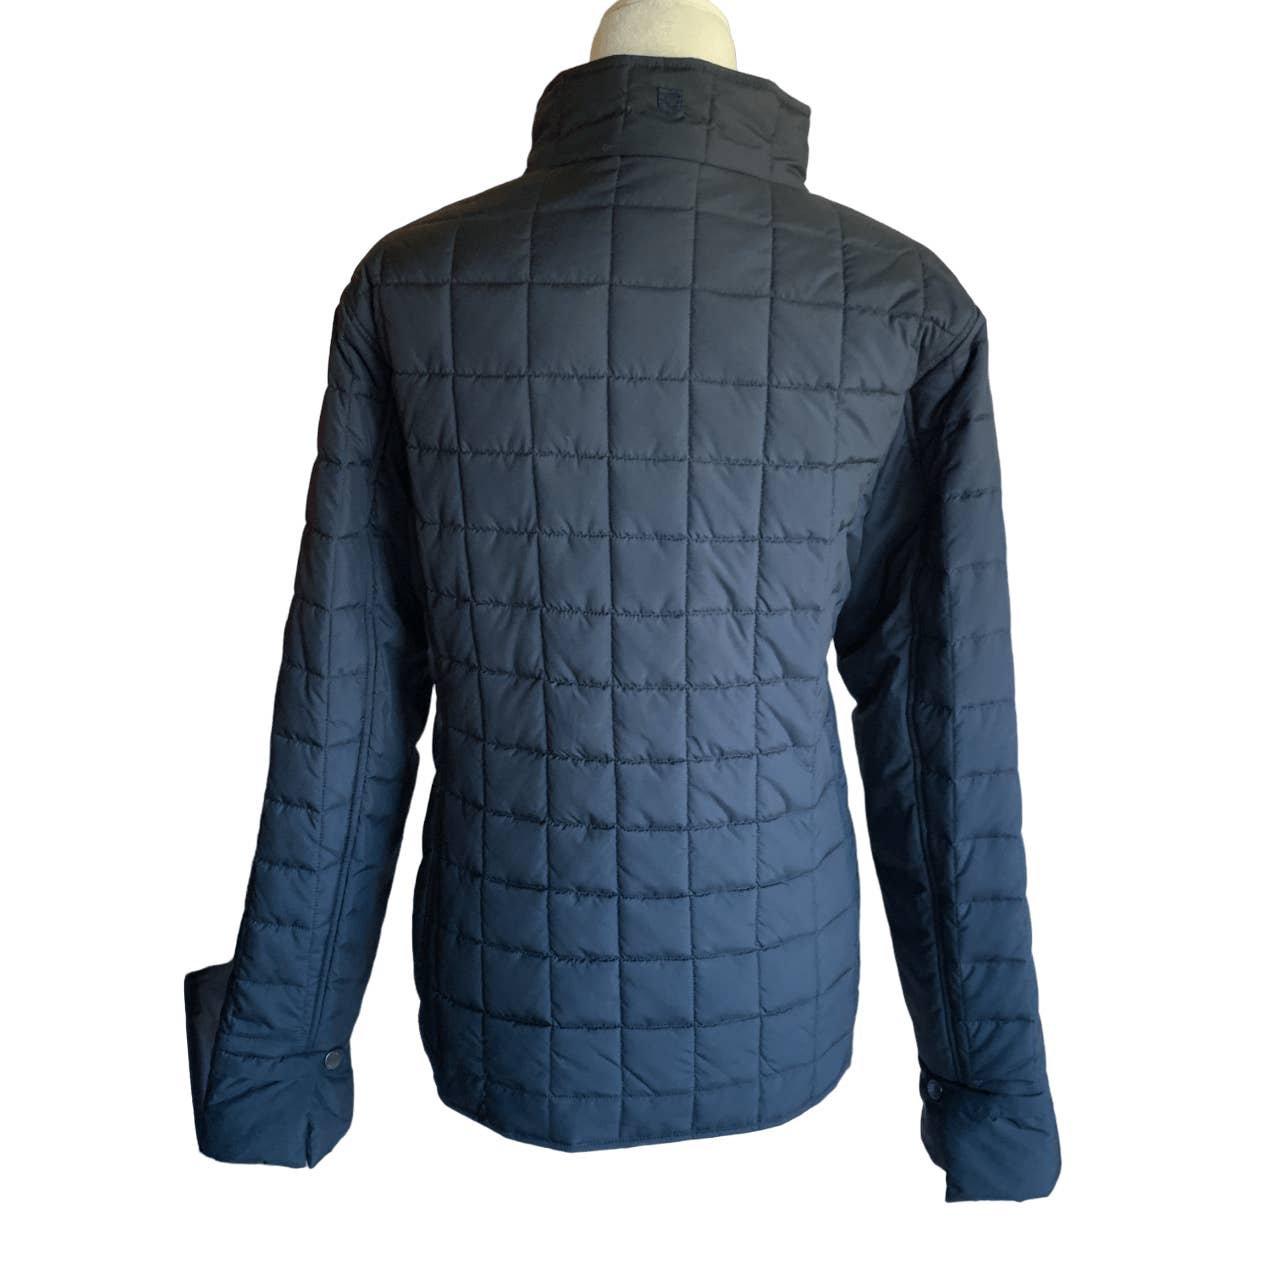 Dubarry Primaloft Quilted Winter Jacket in Black - UK16 (US14)